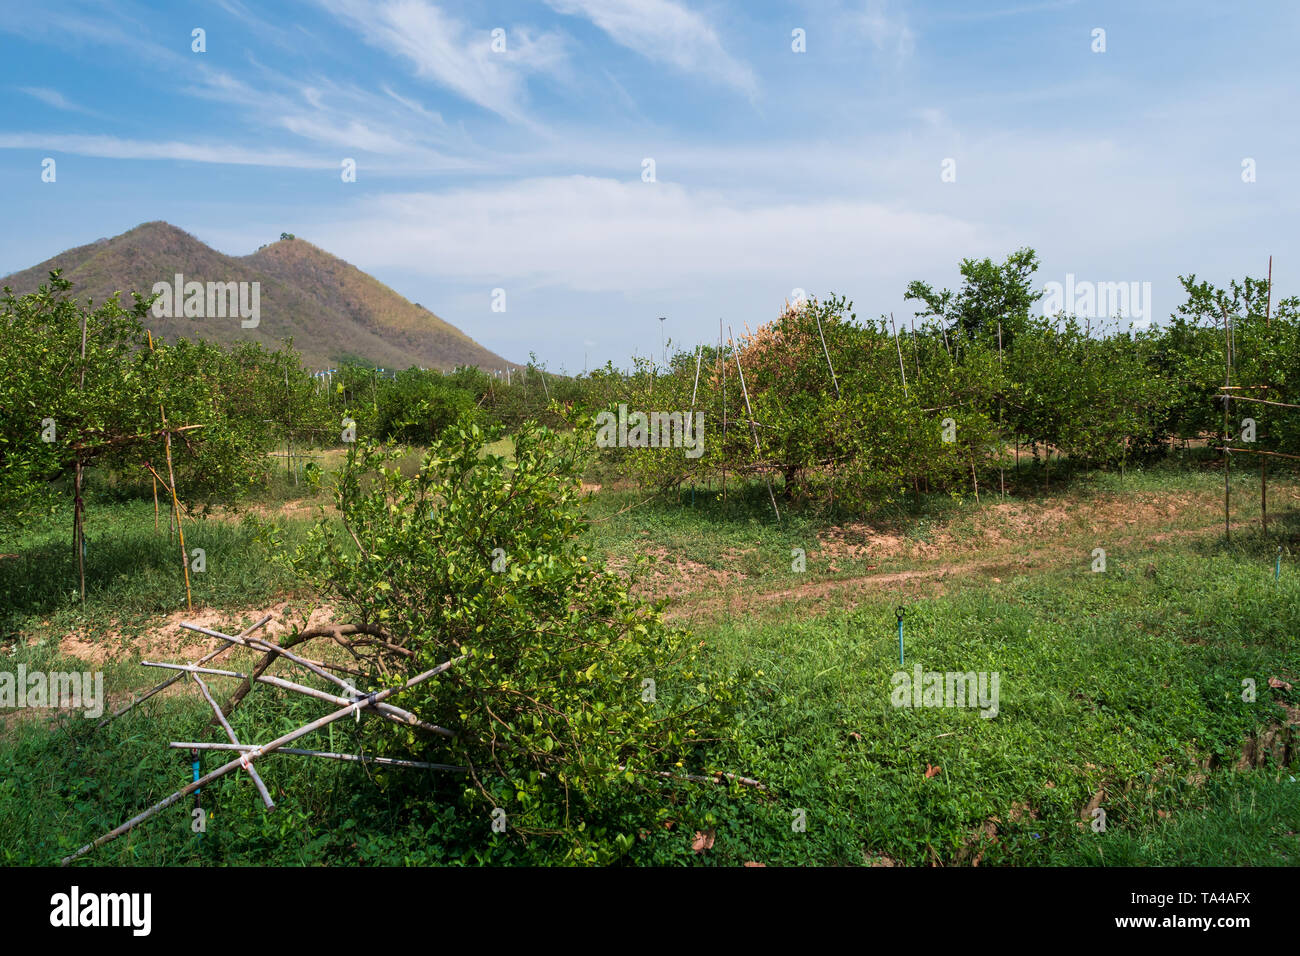 Fresco e natura lemon tree contro la montagna e cielo blu Foto stock - Alamy